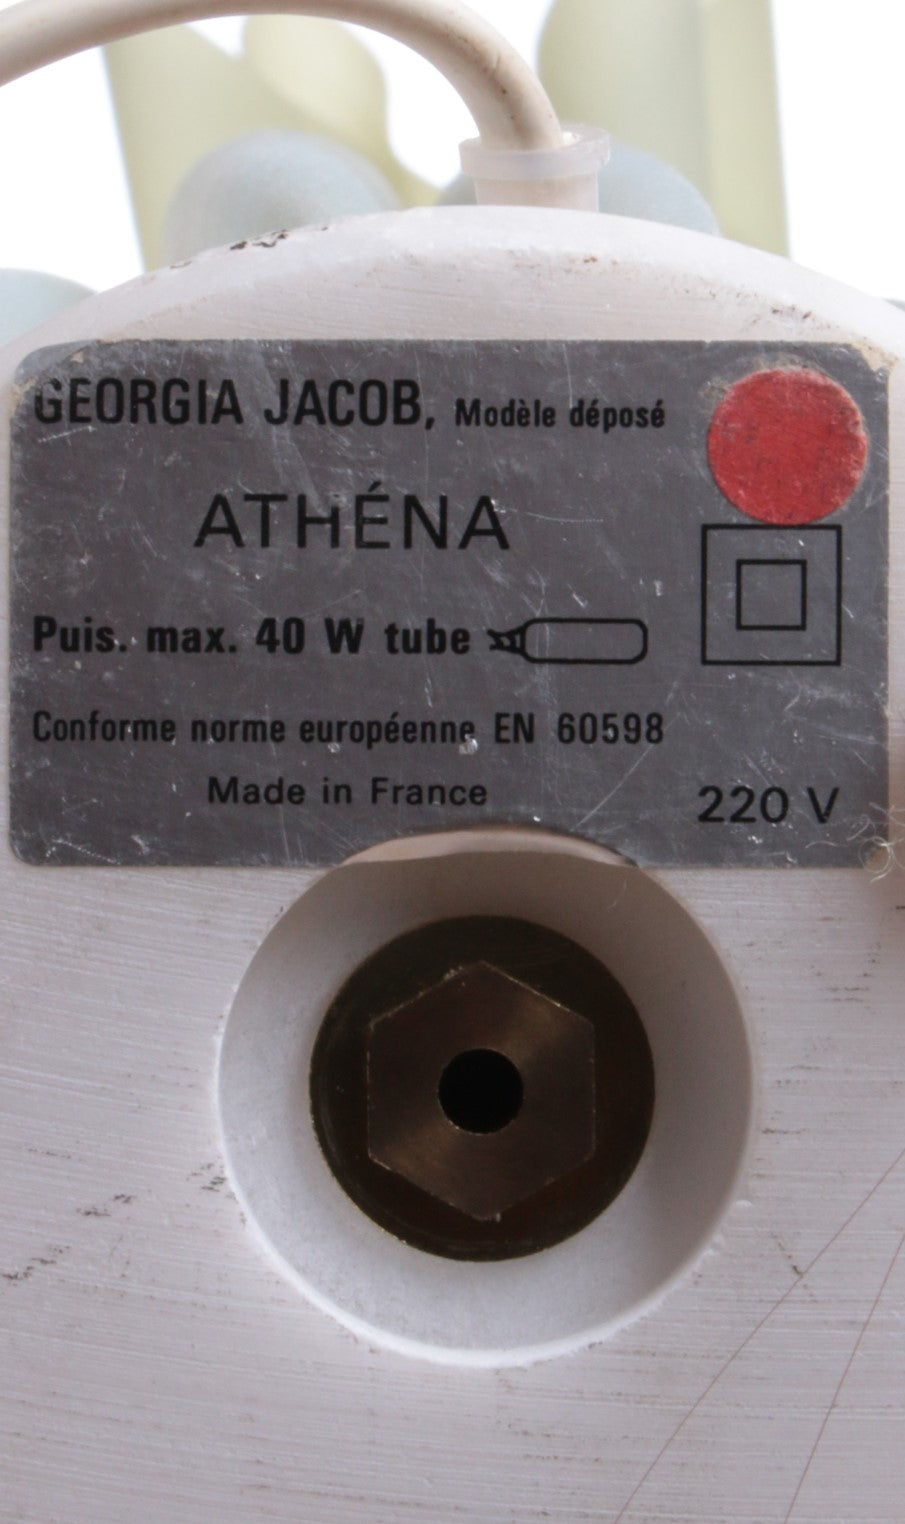 Franse "Athene" gedrapeerde tafellamp door Georgia Jacob, 1970s